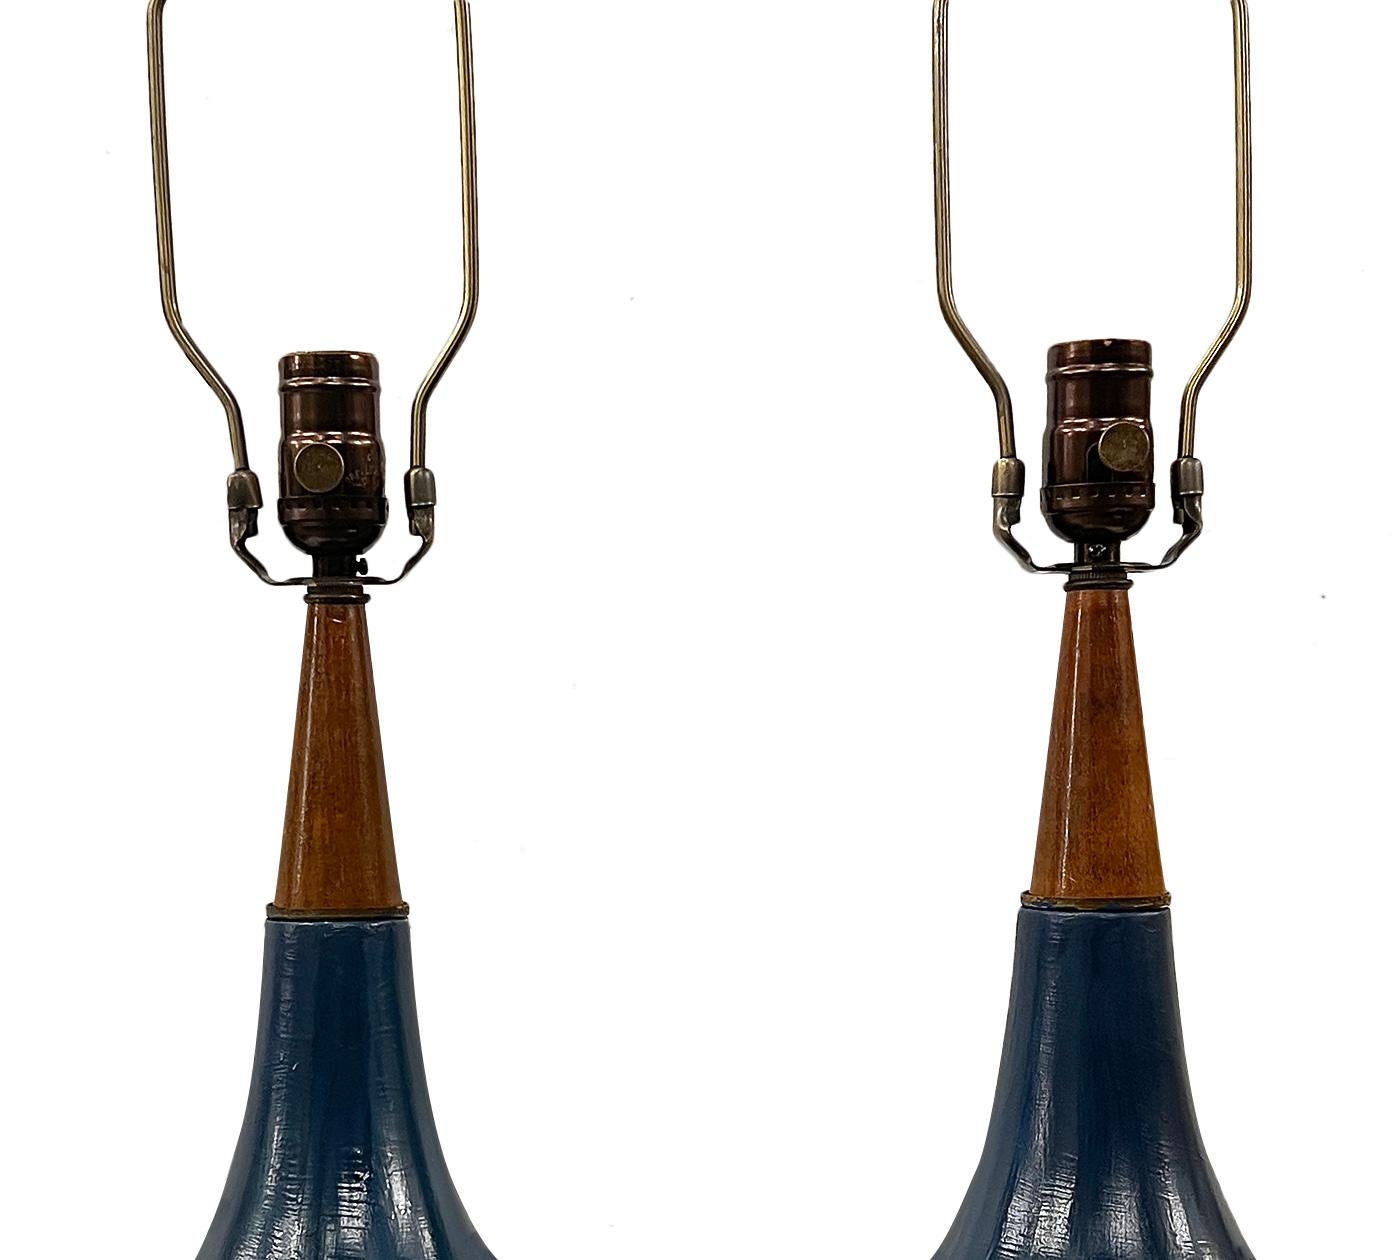 Pair of circa 1960's Italian ceramic lamps.

Measurements:
Height of body: 17